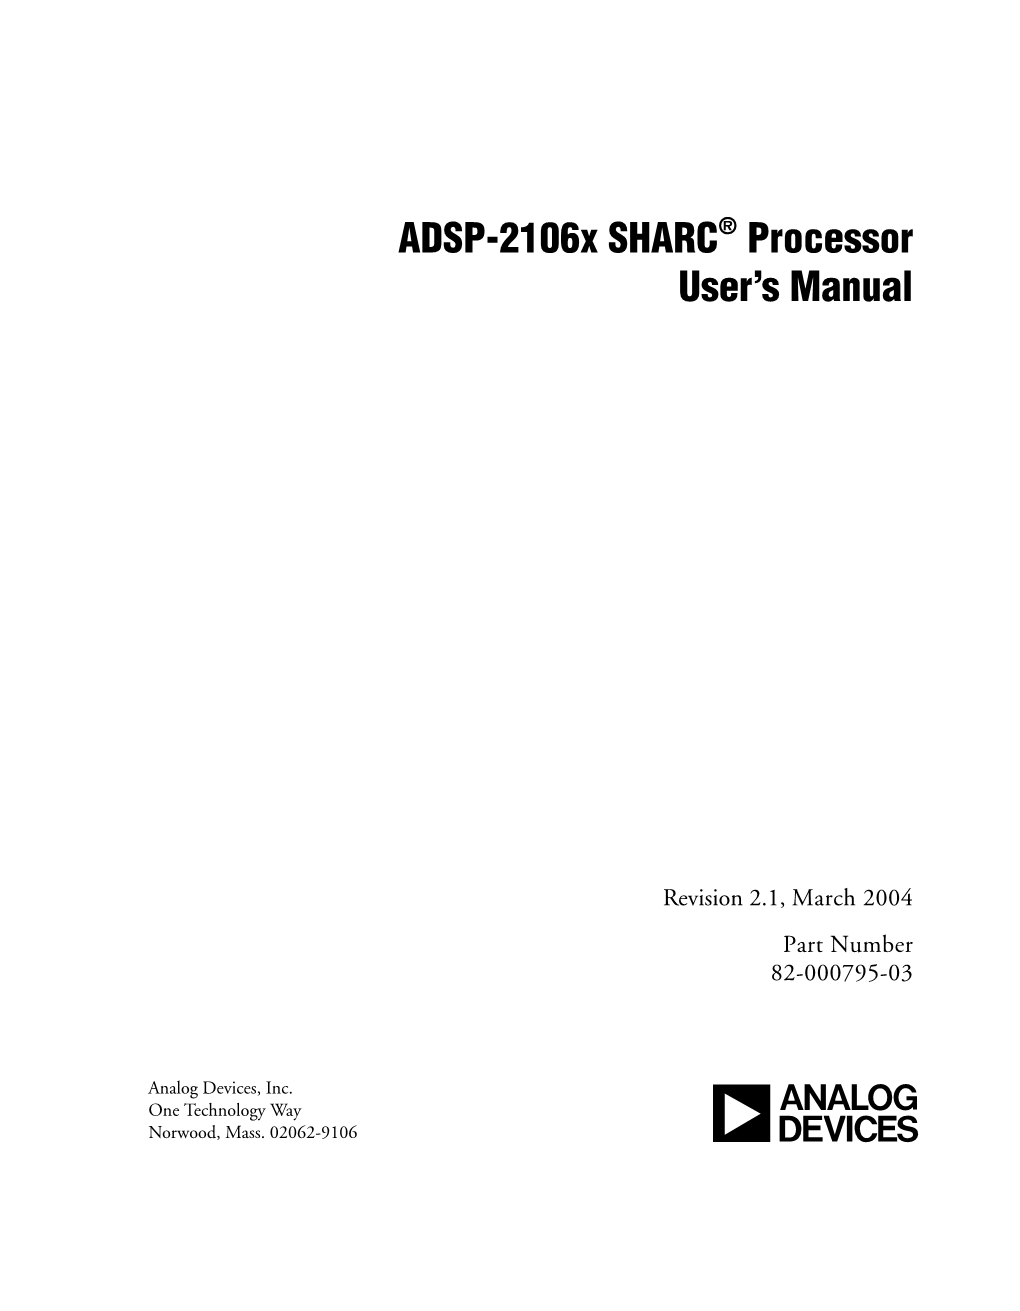 ADSP-2106X SHARC ® User's Manual